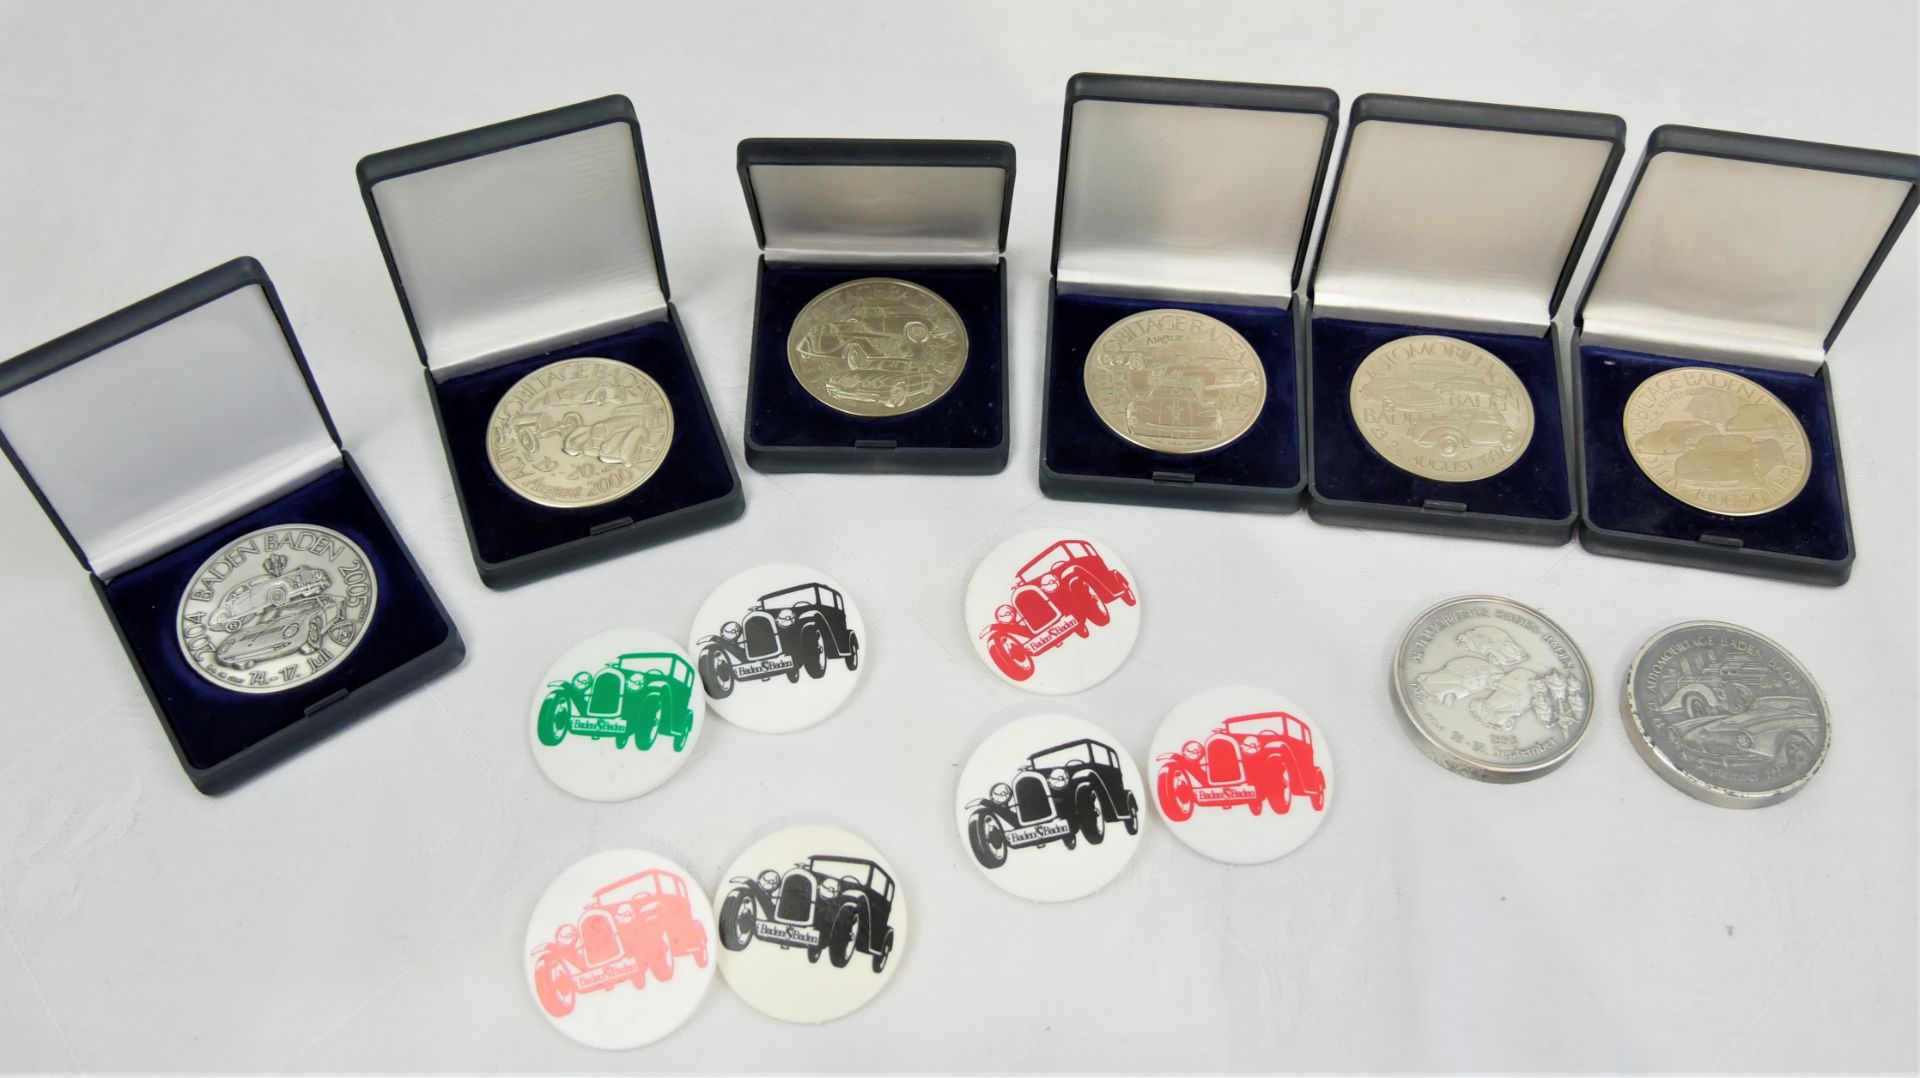 Lot Medaillen "Automobiltage Baden Baden" mit den Jahrgängen: 1992, 1993, 1996, 1997, 1998, 1999,